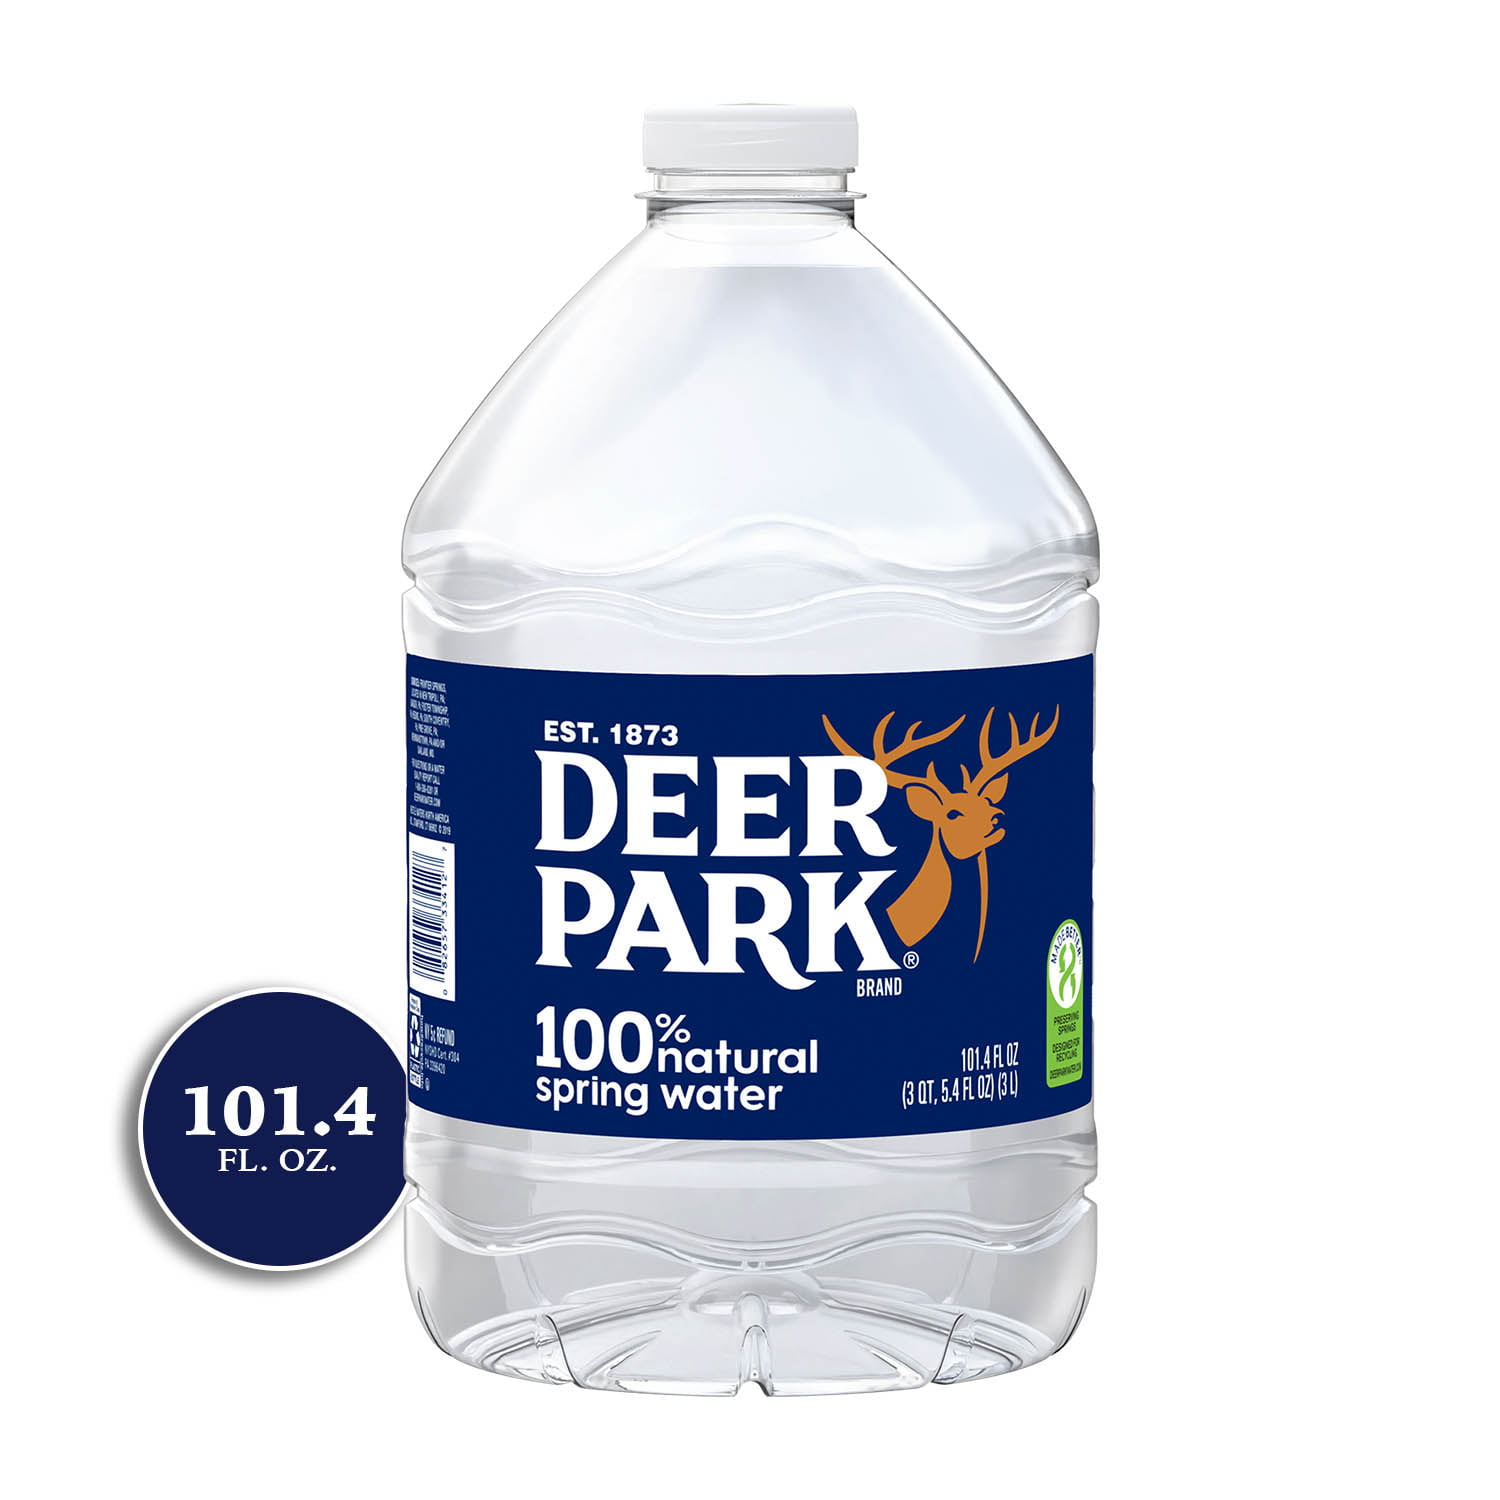 deer-park-brand-100-natural-spring-water-16-9-ounce-plastic-bottles